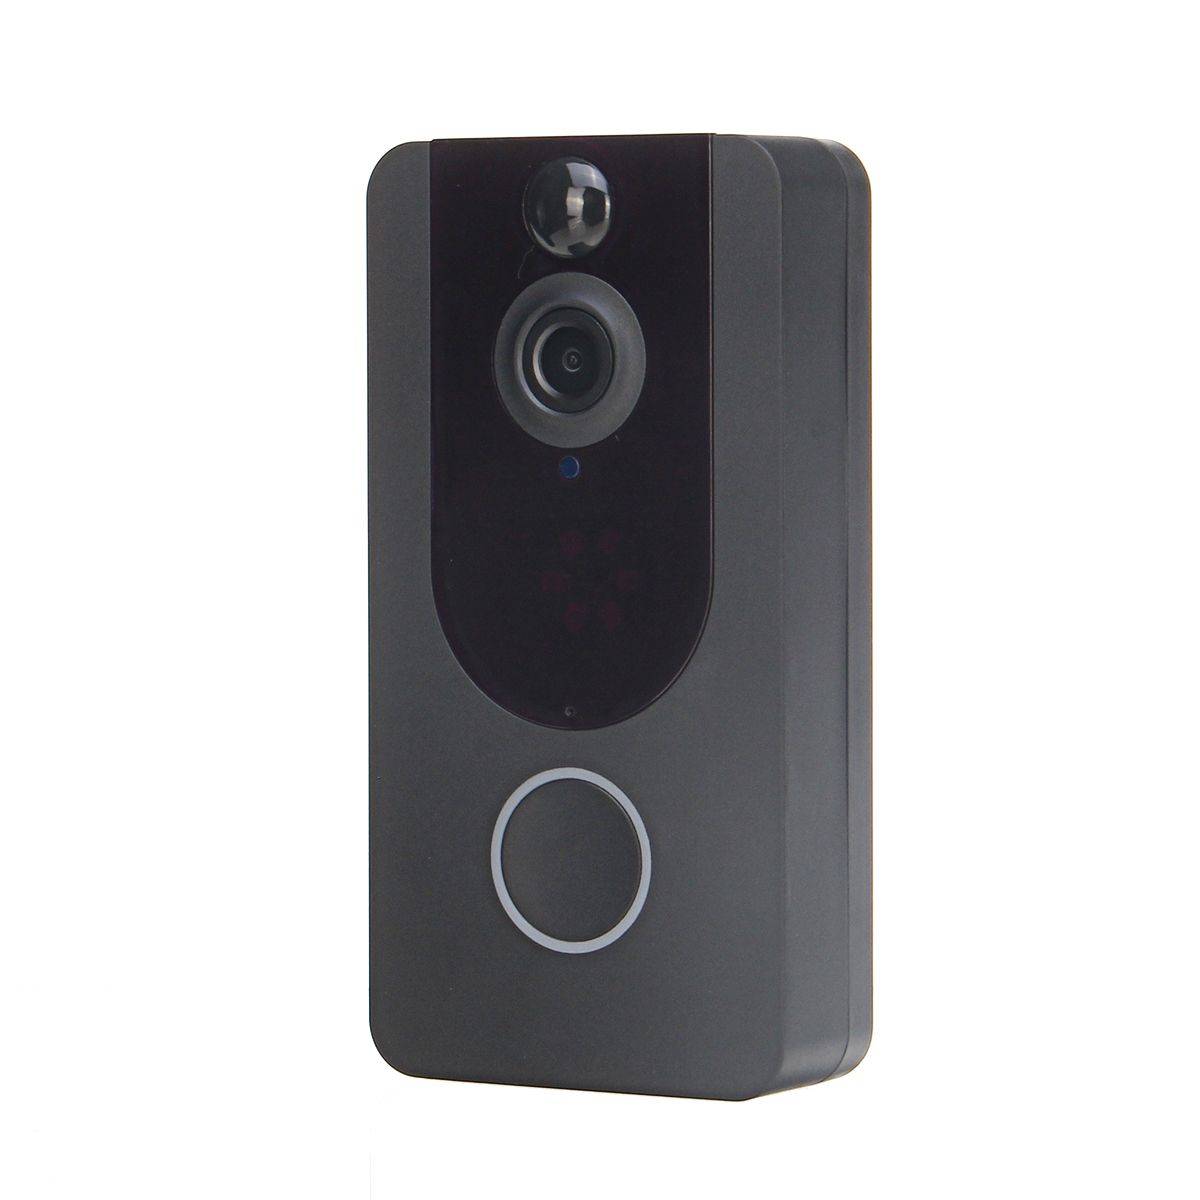 Wireless-Ring-Video-Doorbell-WiFi-Security-Phone-Bell-Intercom-720P-Intercom-1488955